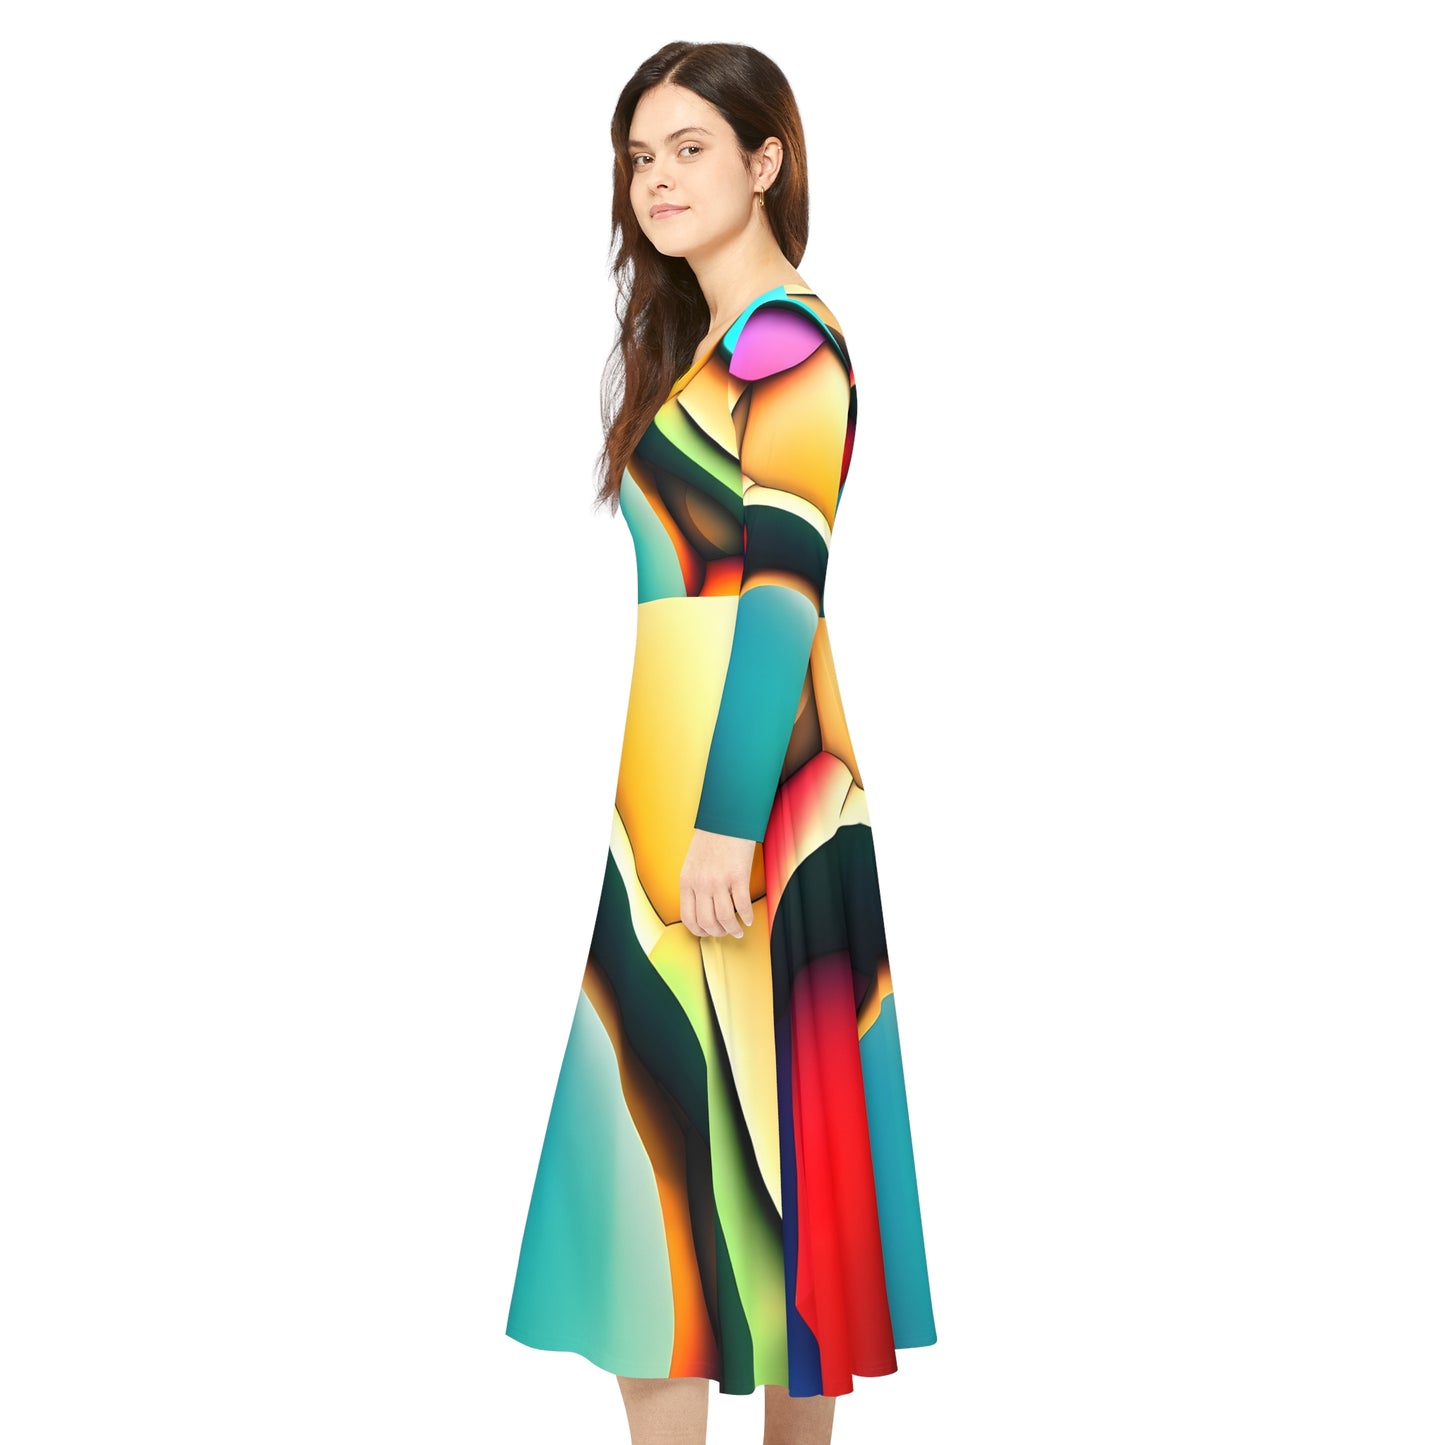 Fashion Women's Long Sleeve Dance Dress (AOP) - Multicolor